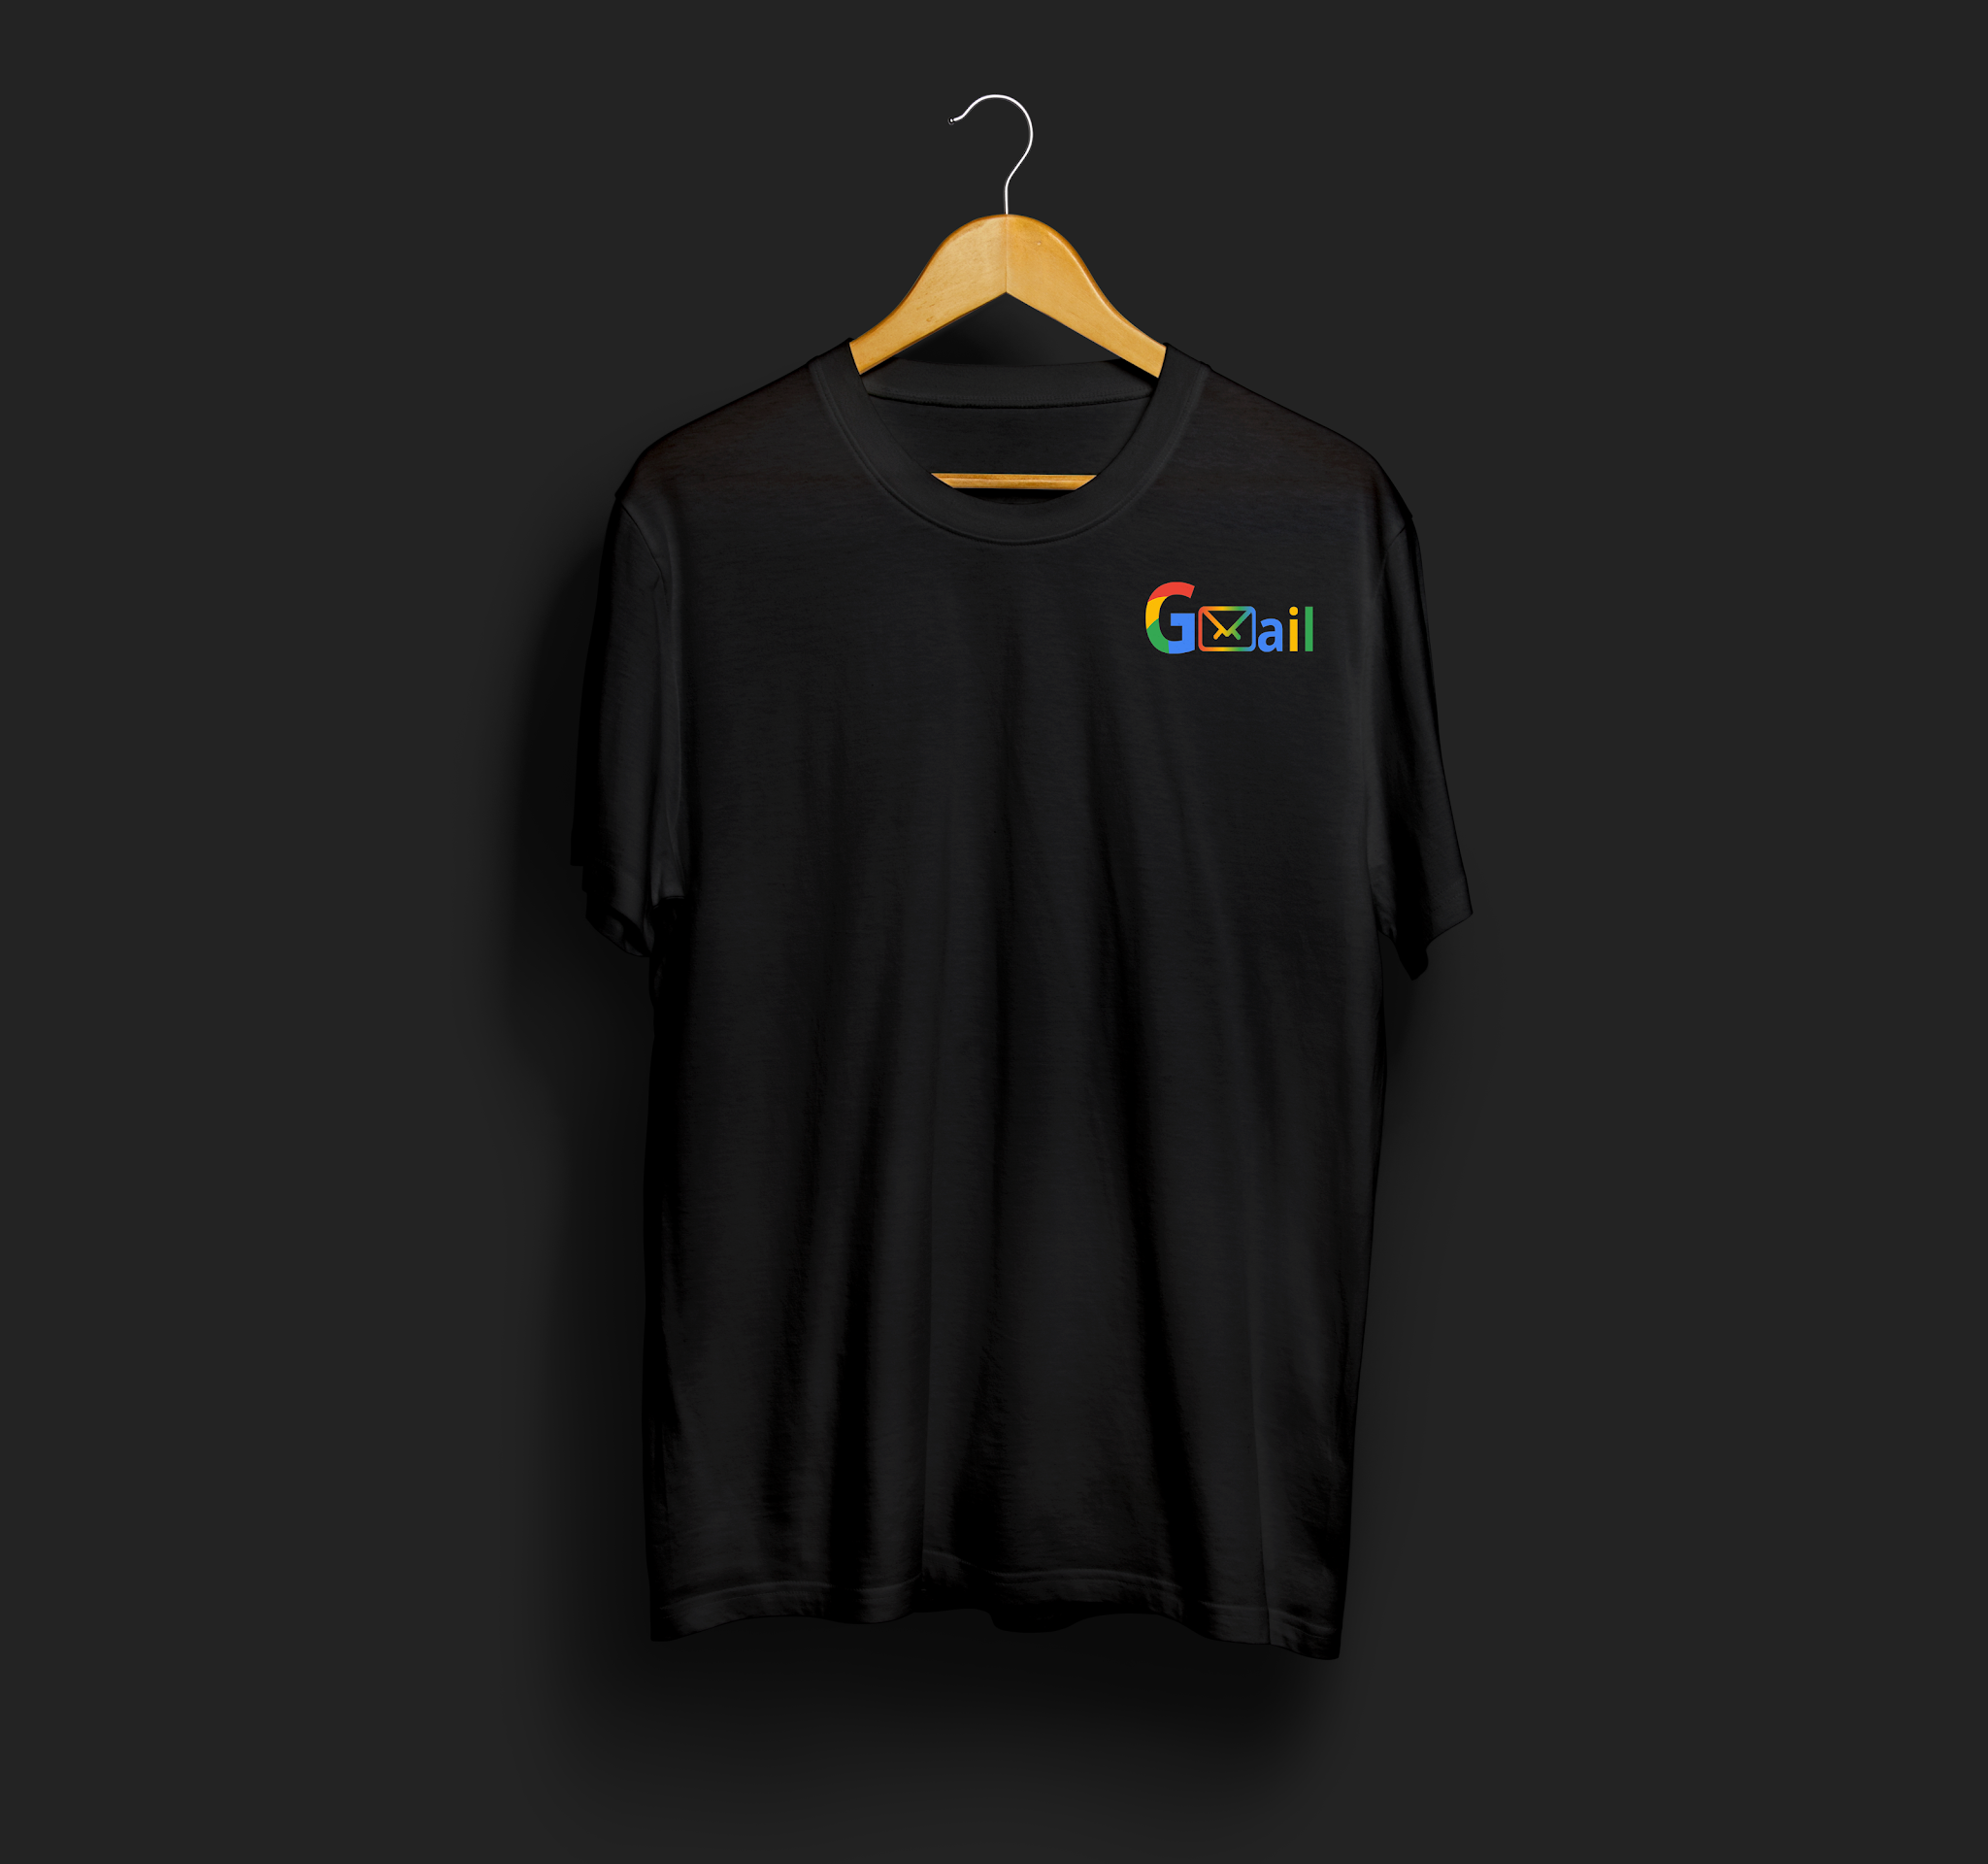 Gmail redesign logo tees